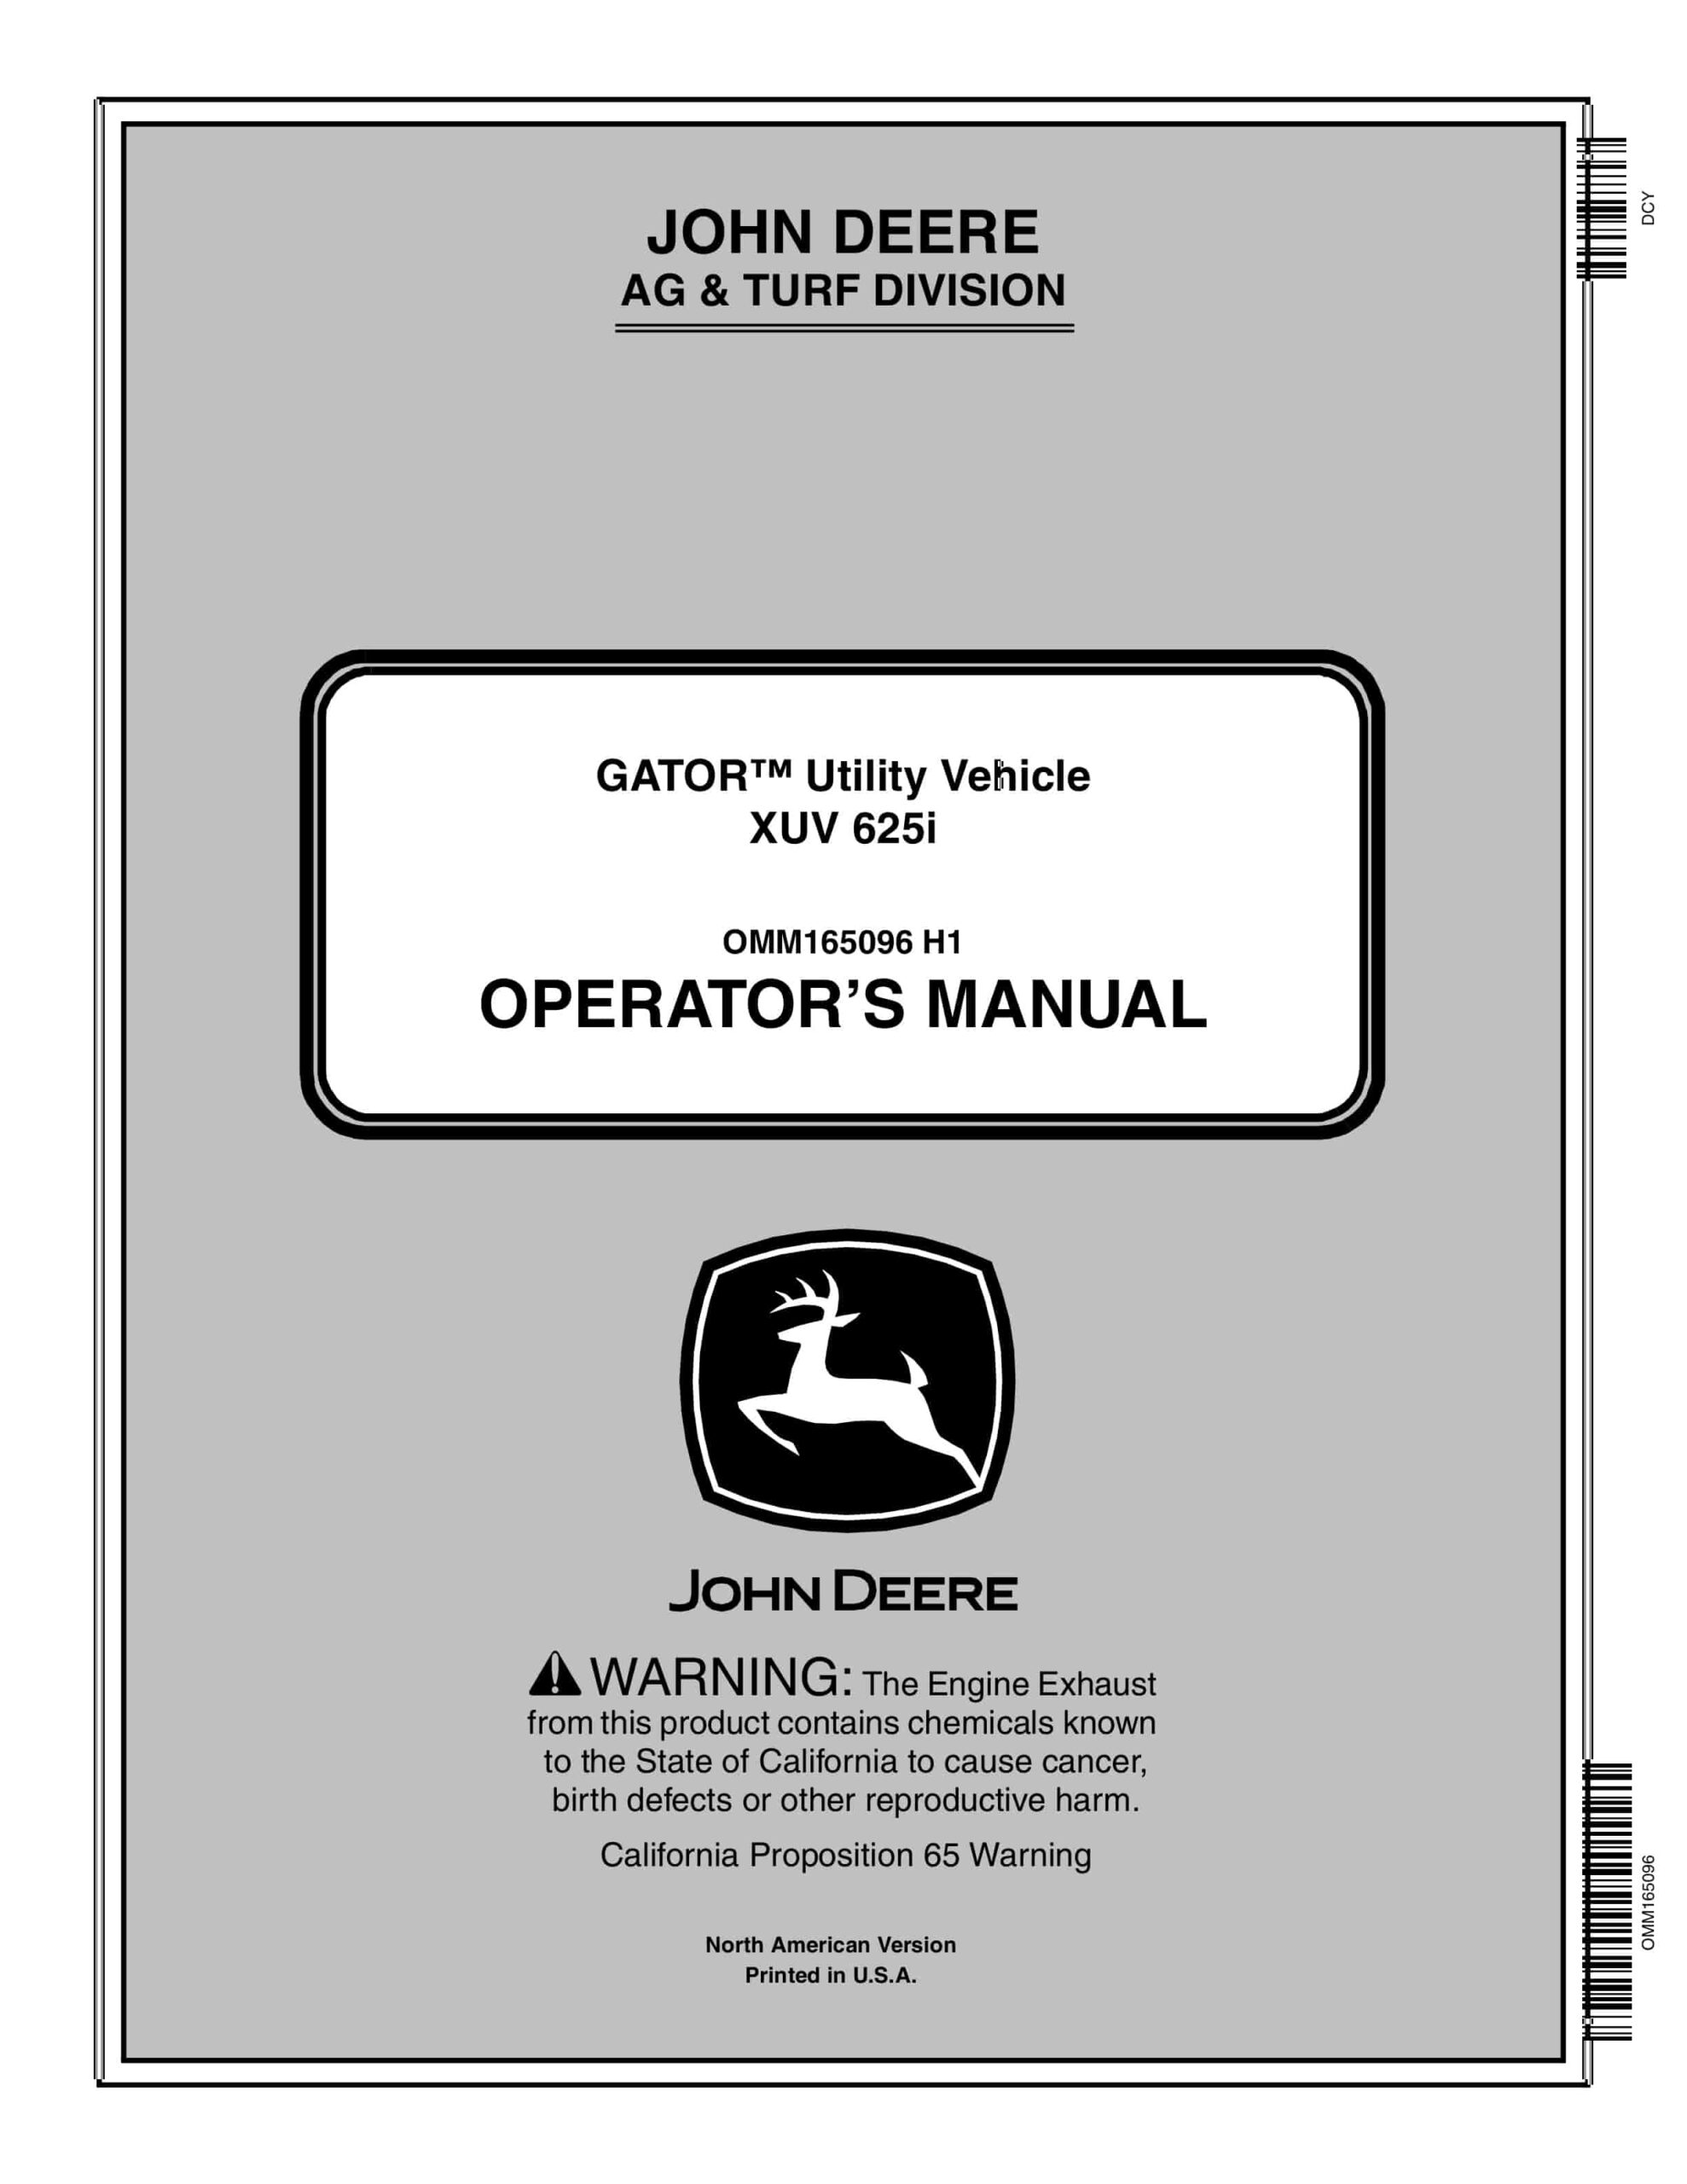 John Deere XUV 625i GATOR Utility Vehicles Operator Manual OMM165096-1